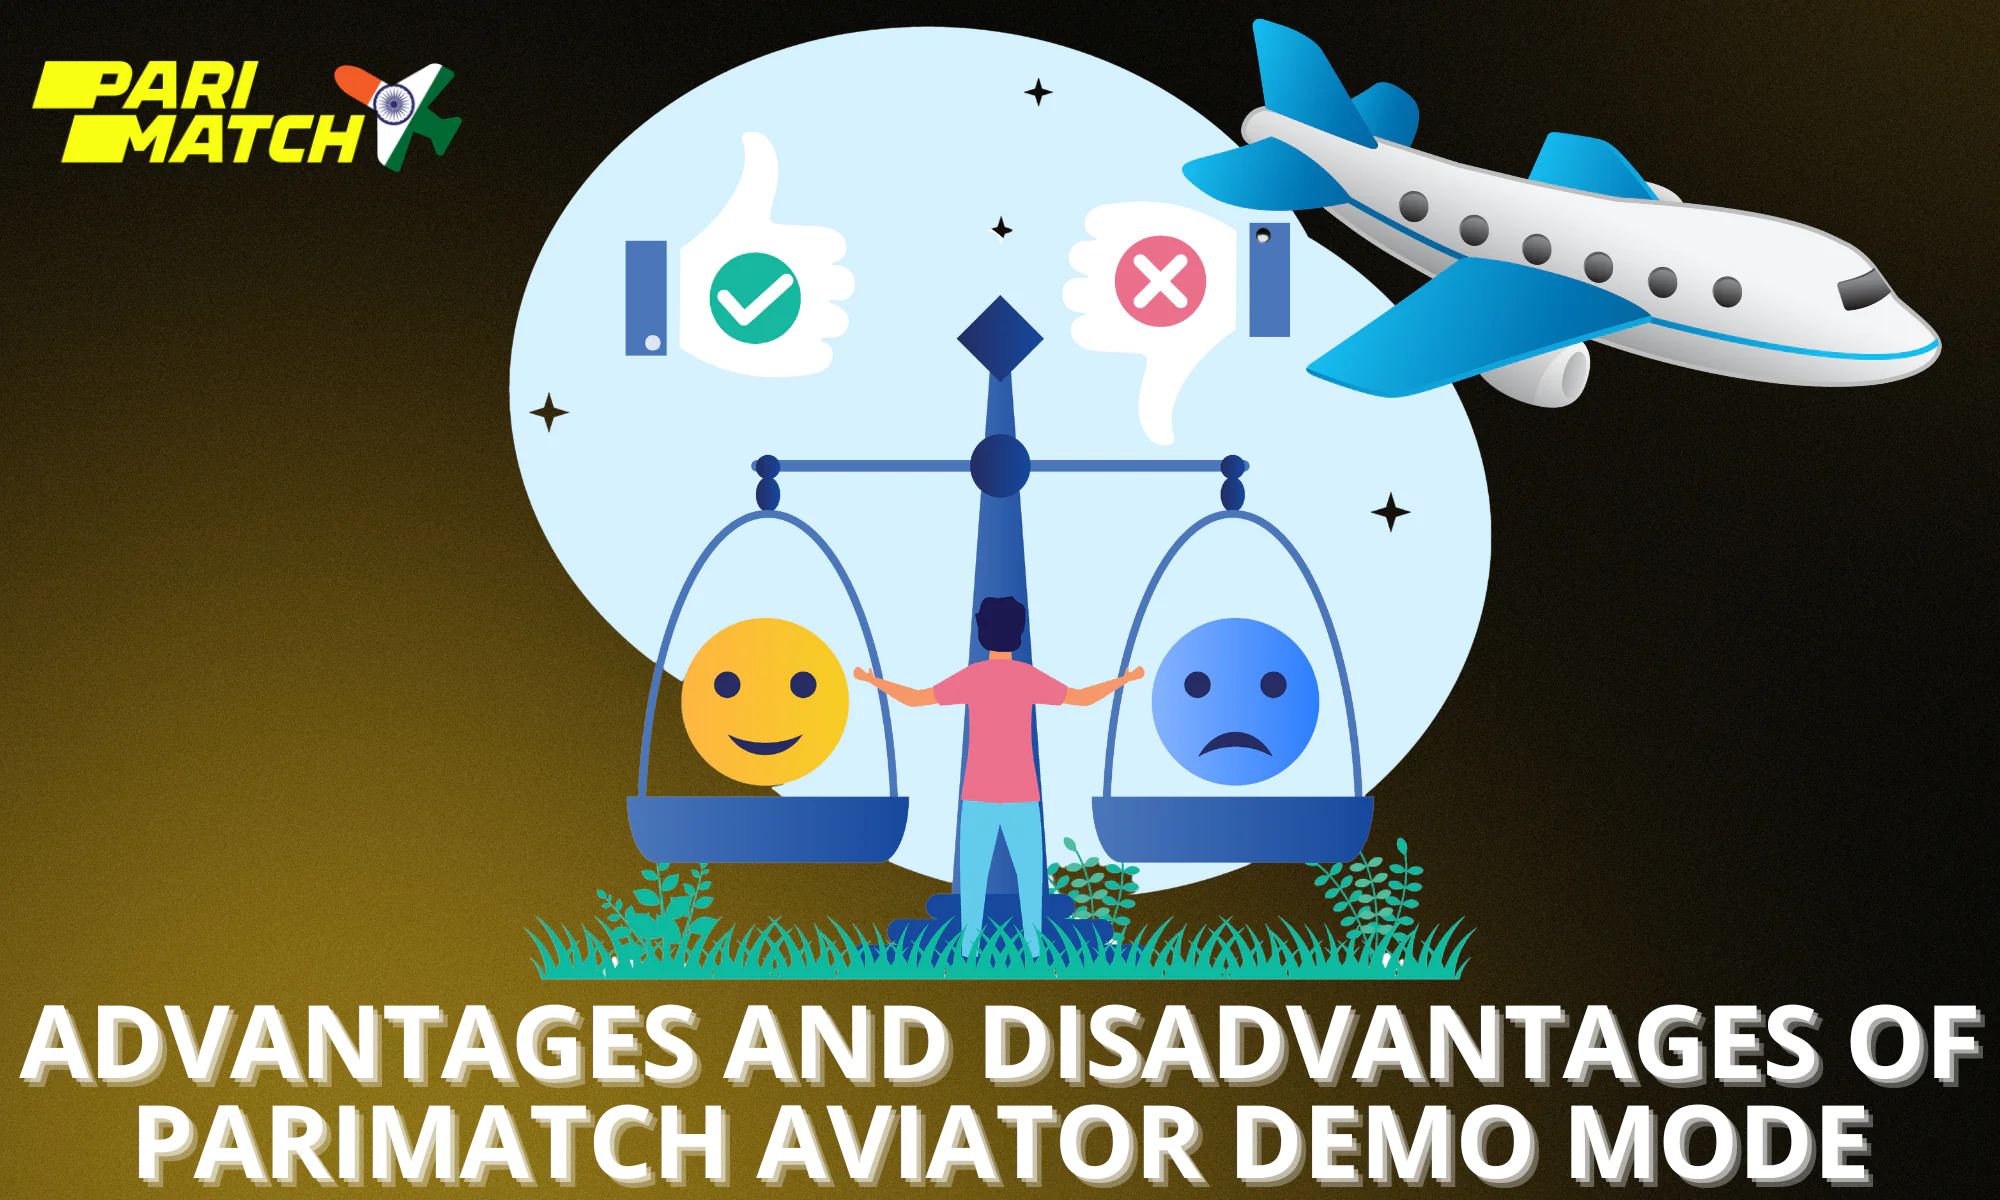 Advantages and disadvantages of Parimatch Aviator demo mode